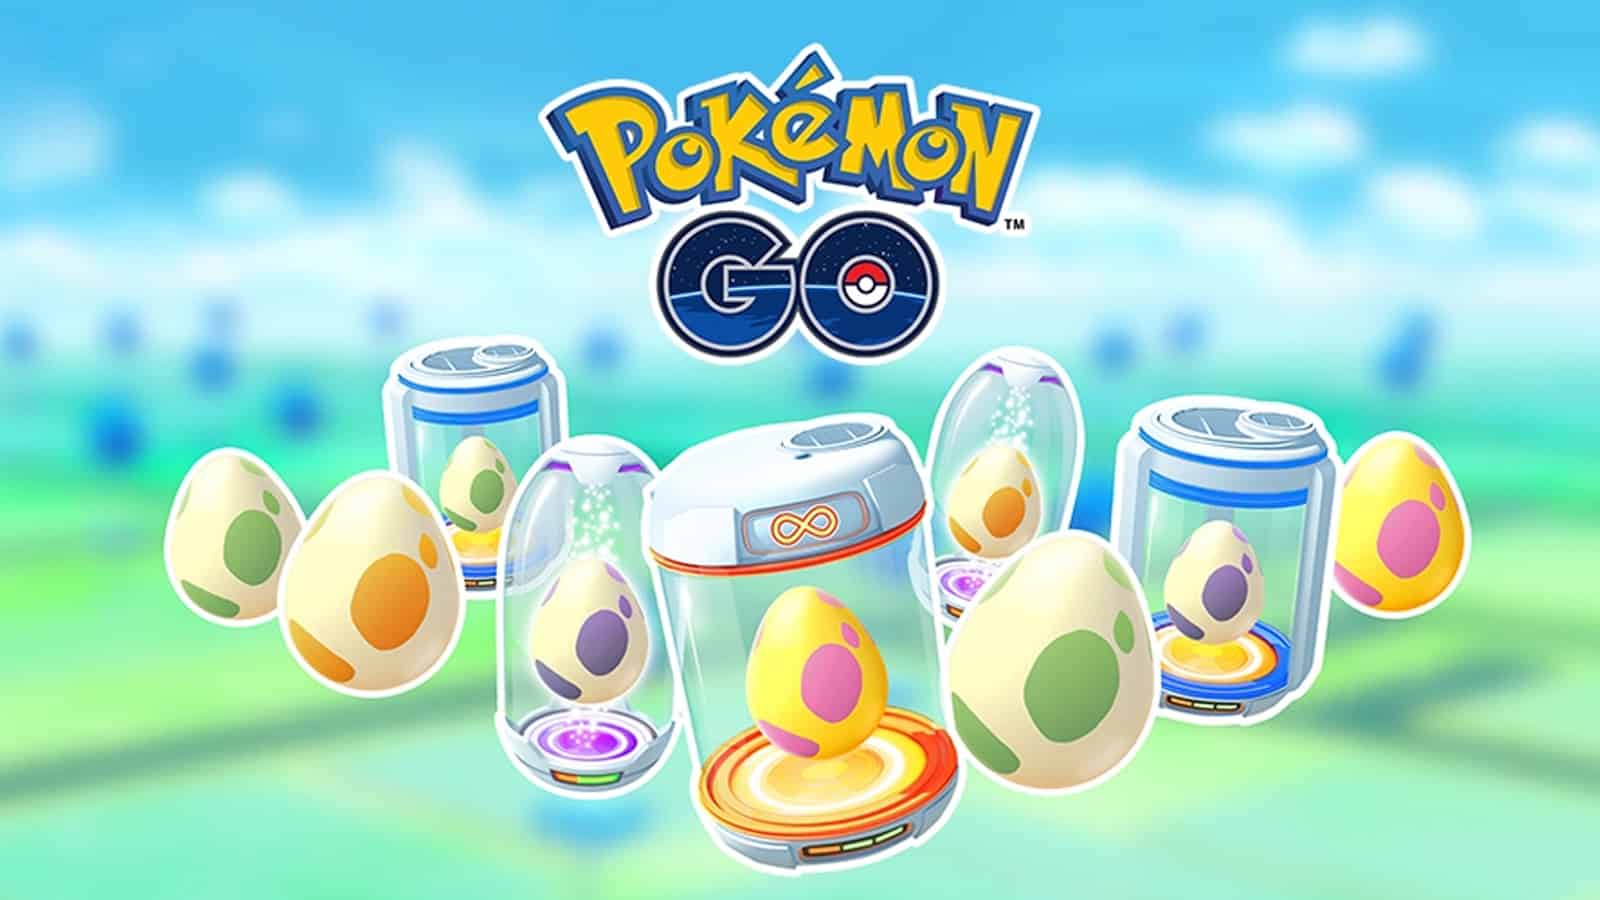 Pokémon Go Full Egg Hatch List 2km, 5km, 7km, 10km, and 12km (January